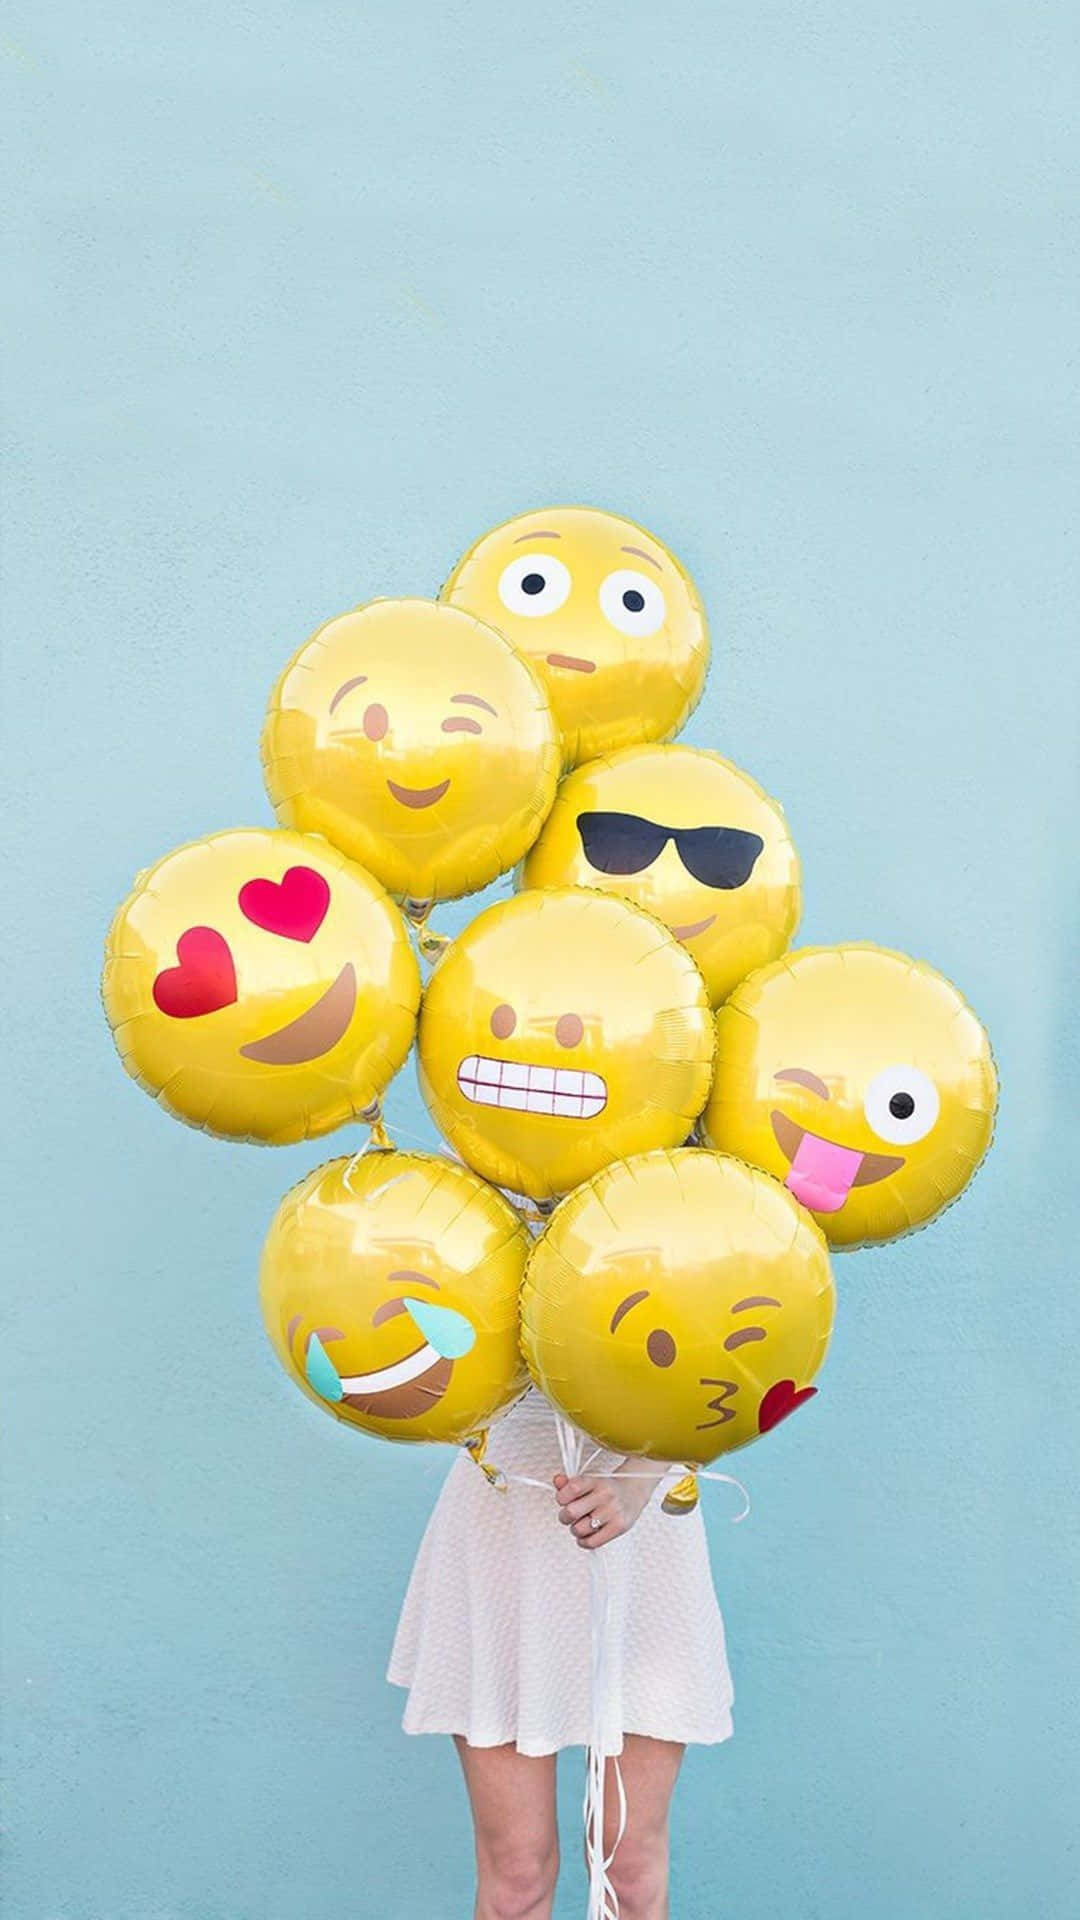 "Smiling Away with Cute Emojis" Wallpaper